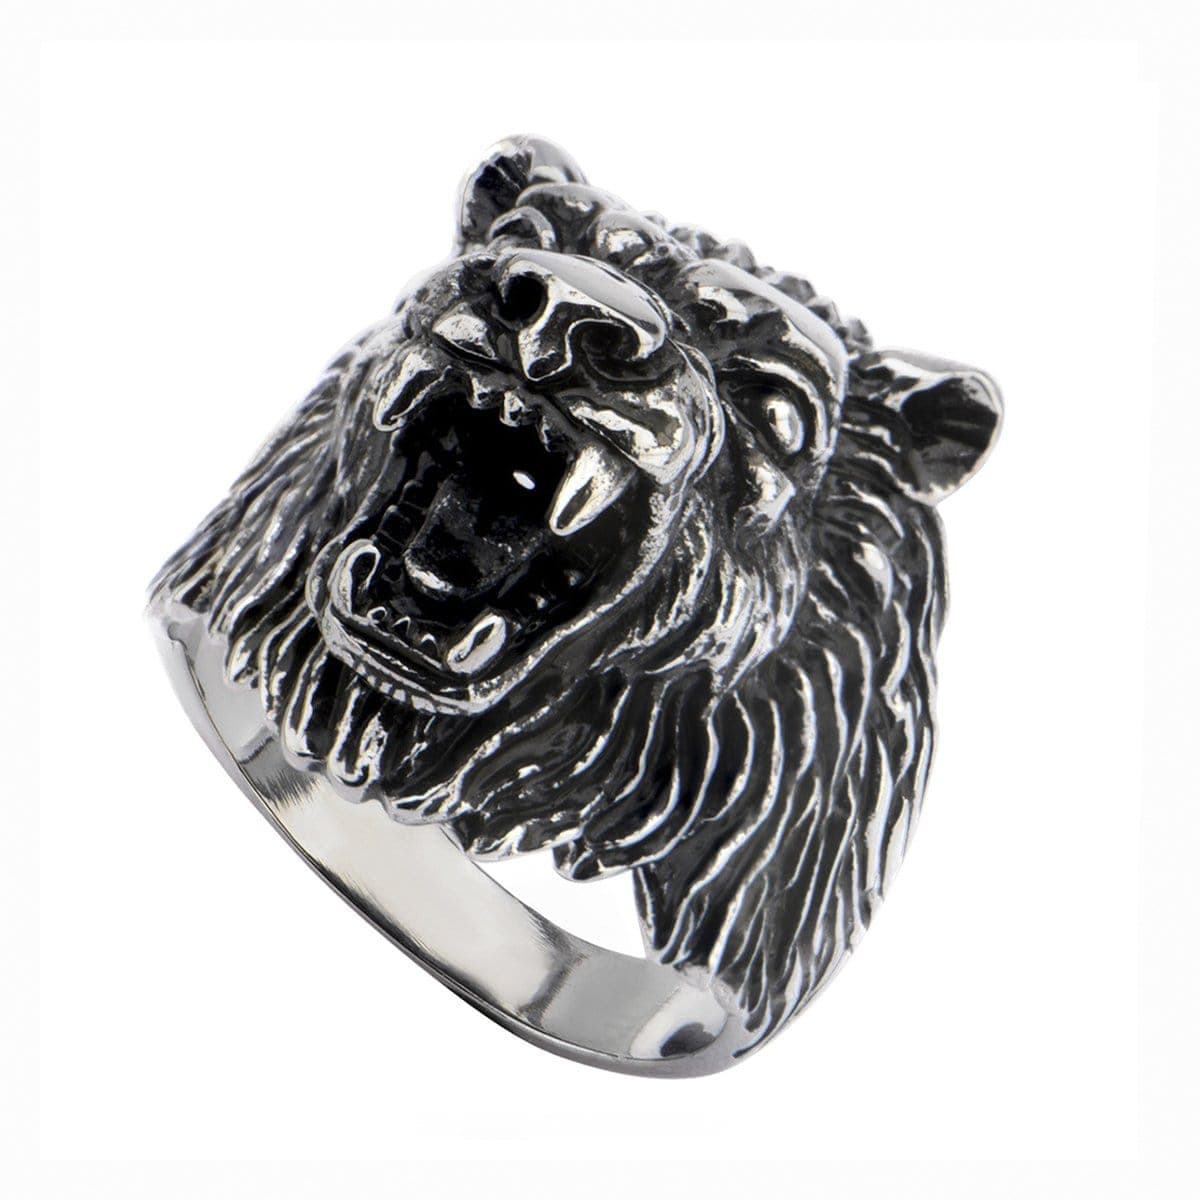 INOX JEWELRY Rings Antiqued Silver Tone Stainless Steel Fierce Wolf Head Ring